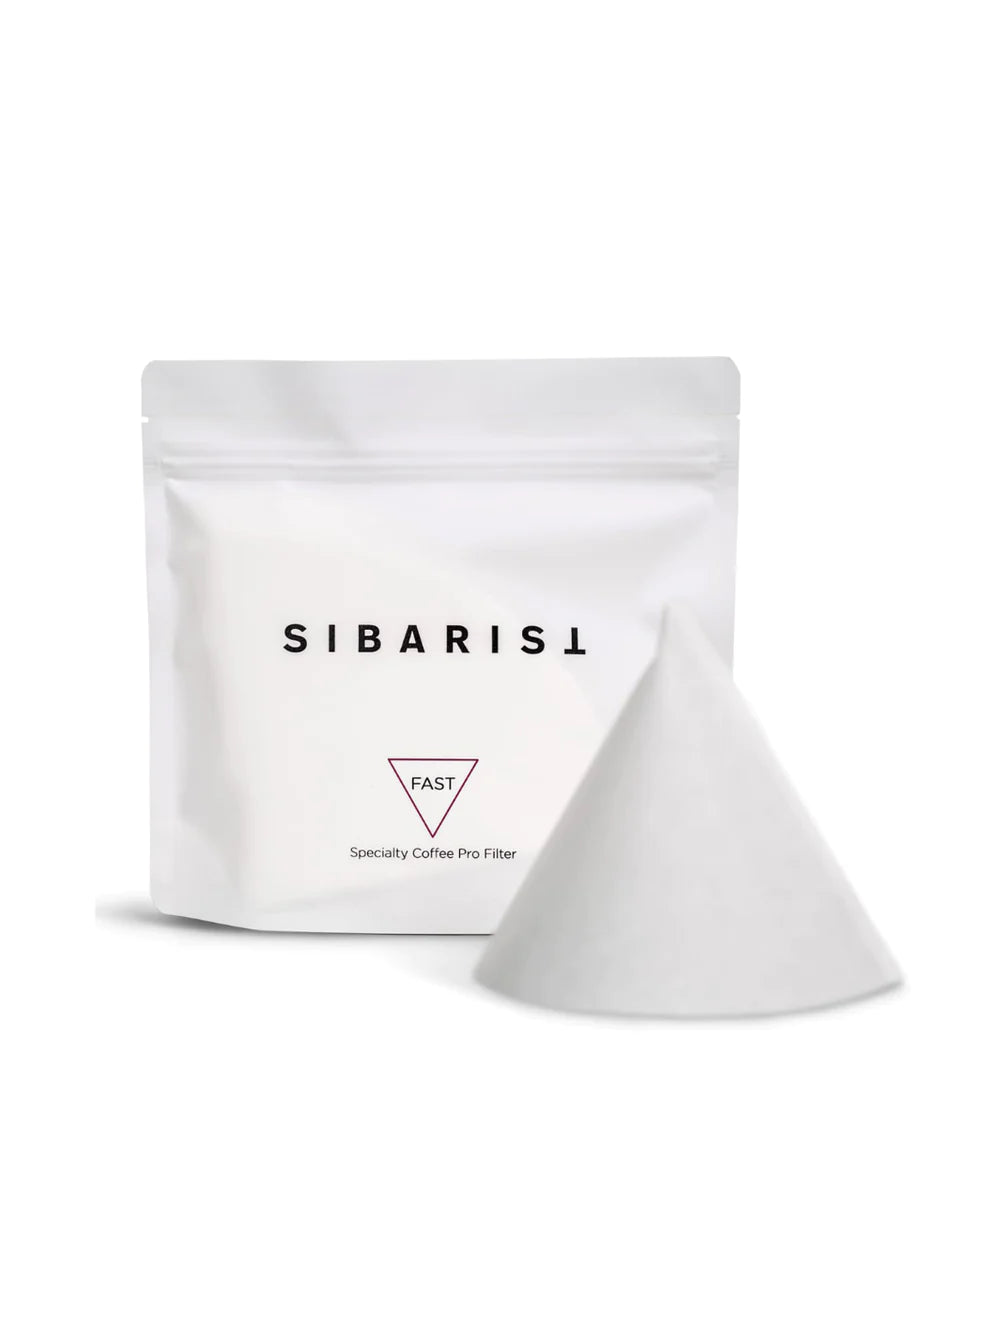 SIBARIST -  Fast - Conic filters (M) - 25 units